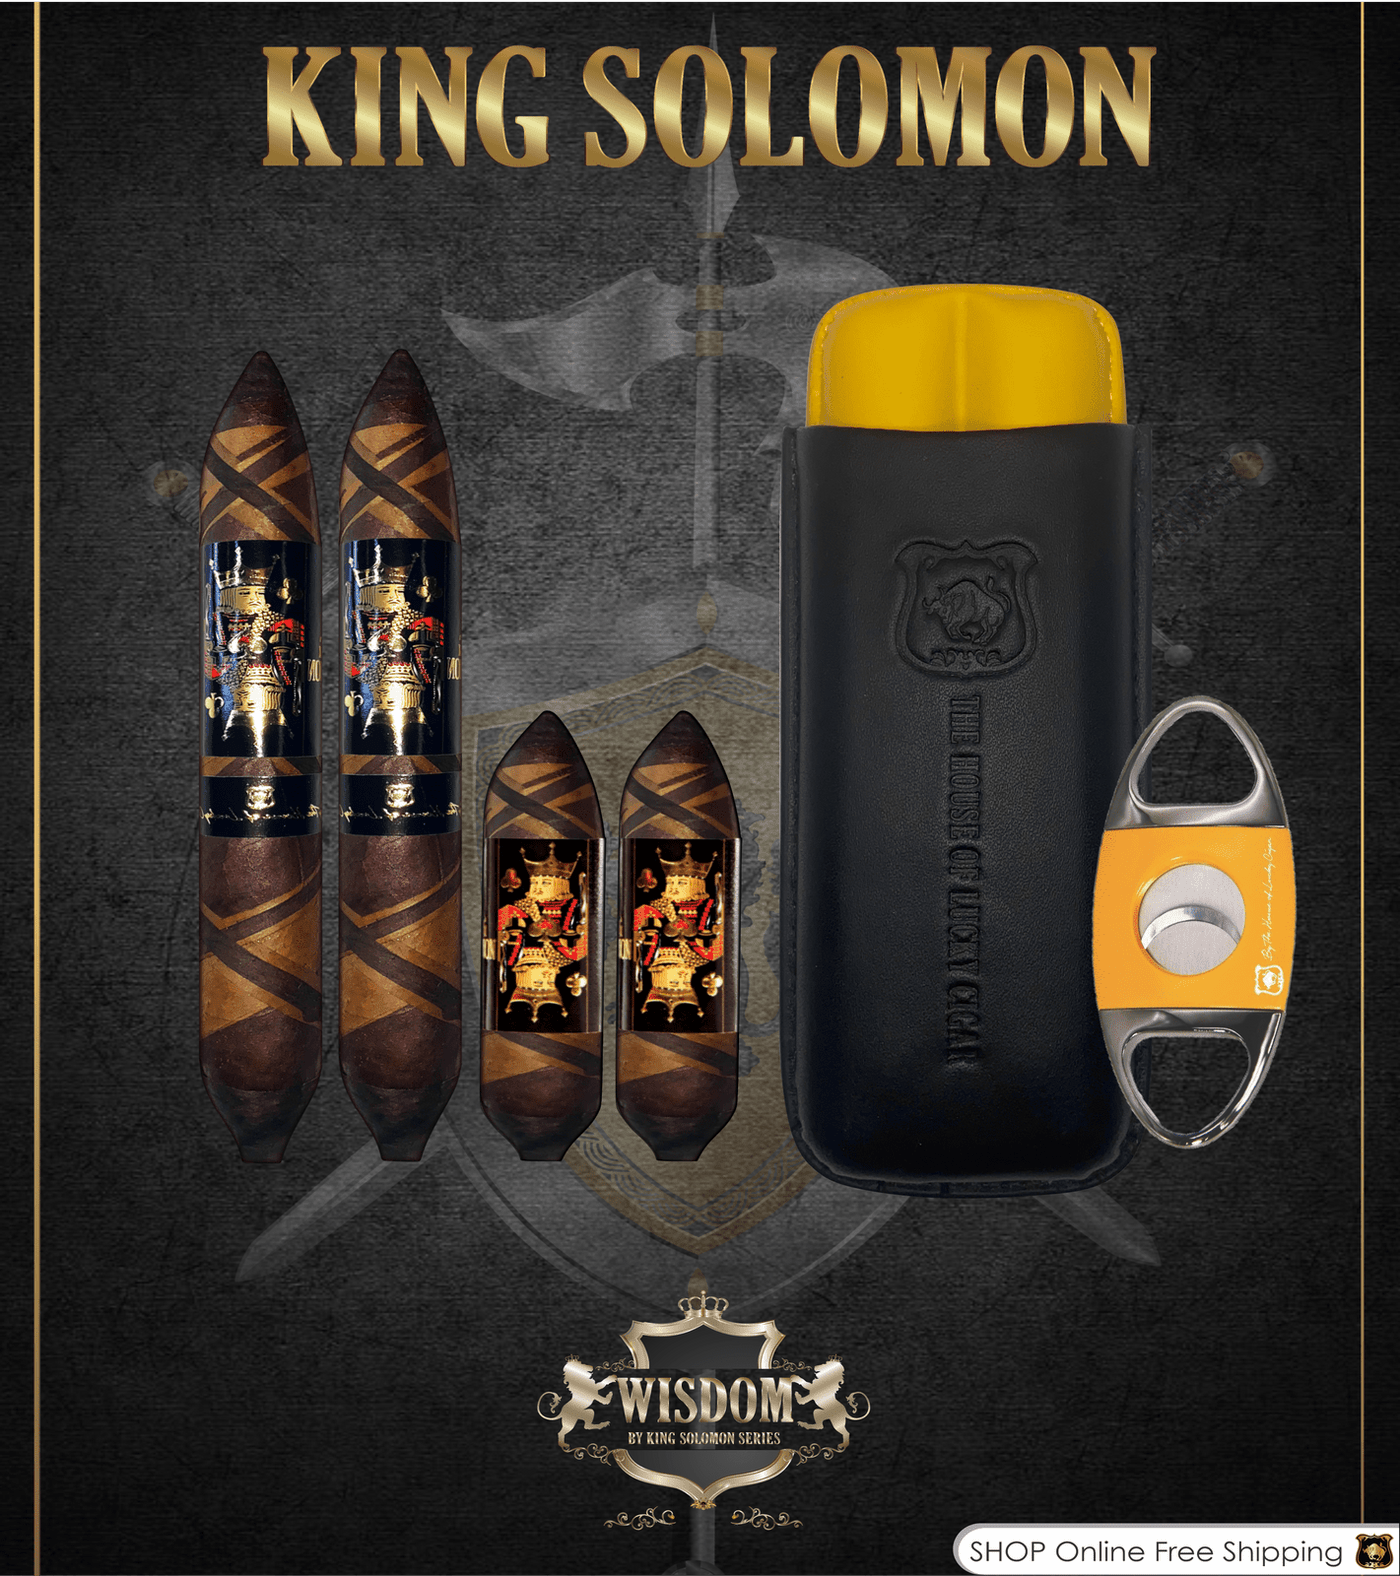 Wisdom 4x60 Cigar From The King Solomon Series: Set of 2 and 2 King Solomon 7x58 Cigar with Humidor and Lighter